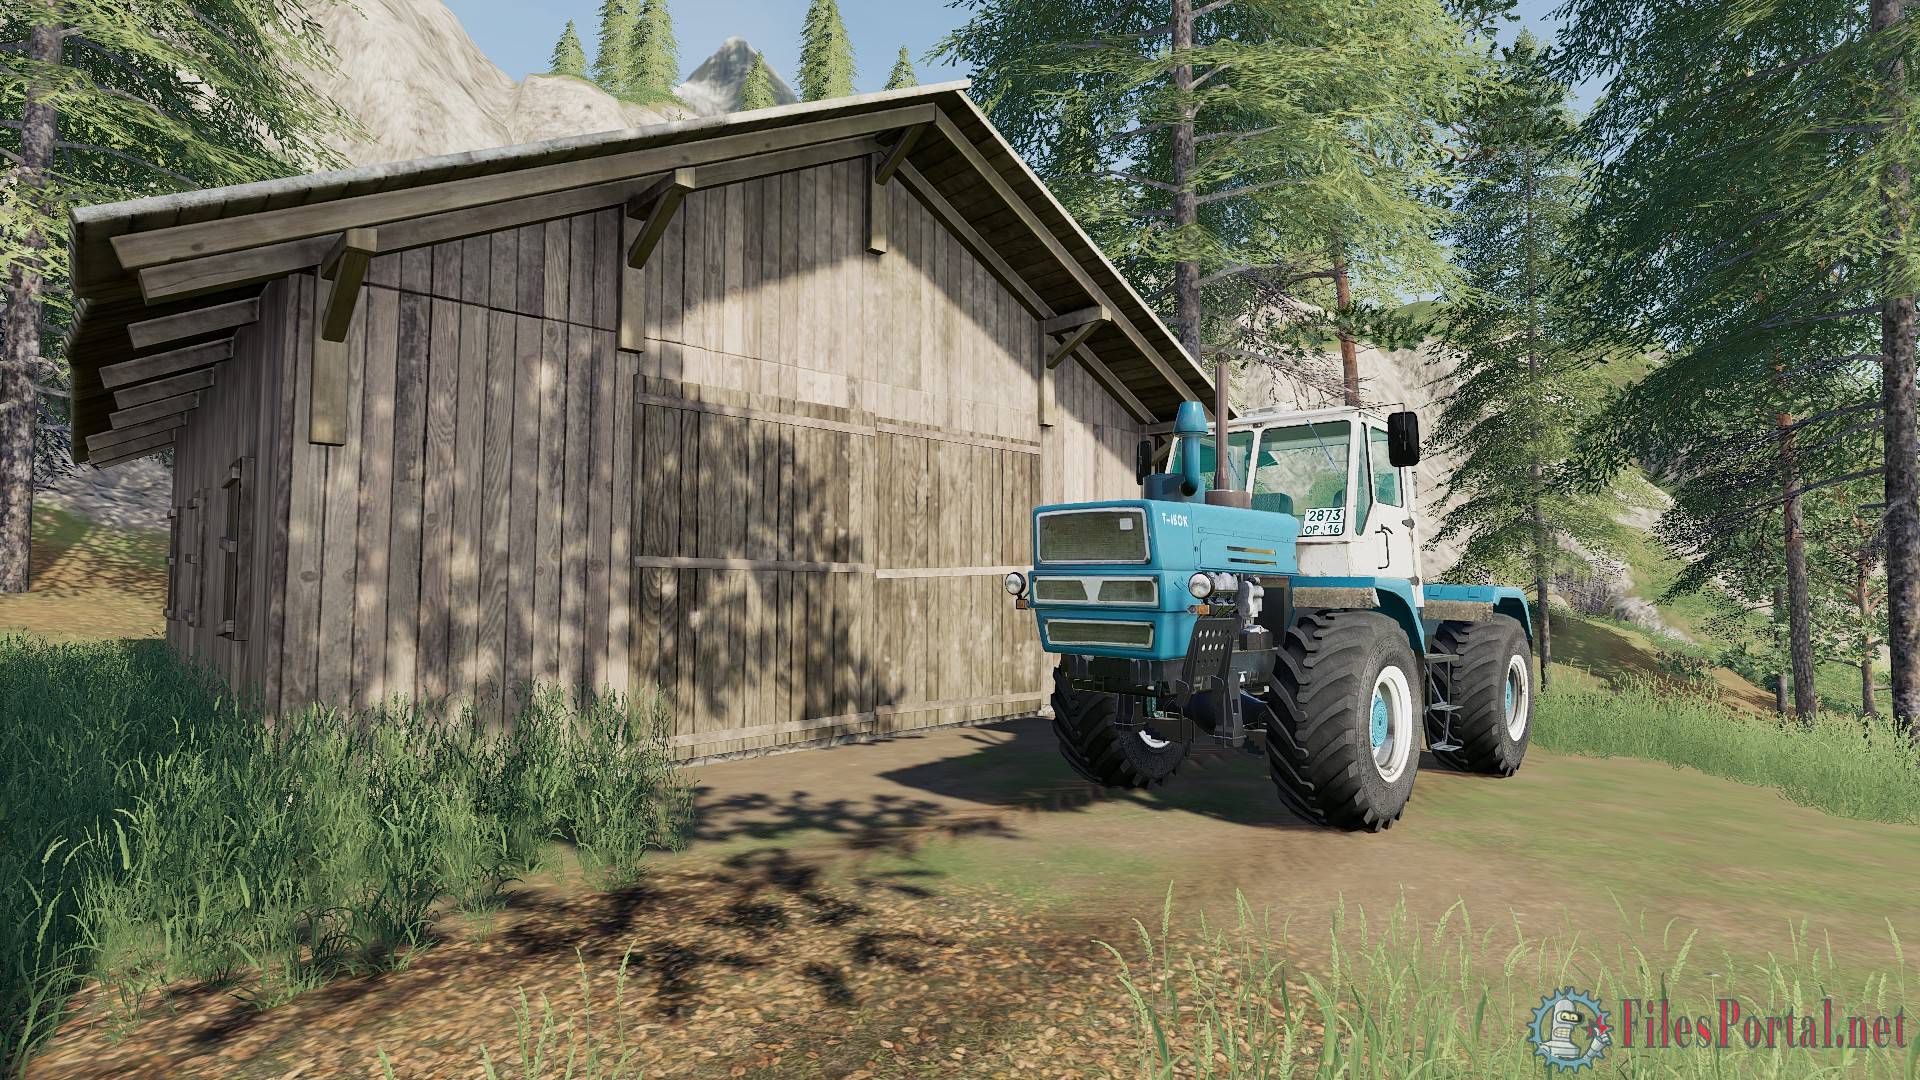 Farming simulator новая игра. Fs19_HTZ_t150_i. Т 150 для ФС 19. Т-150 трактор fs19. FS 15 Т 150 К.